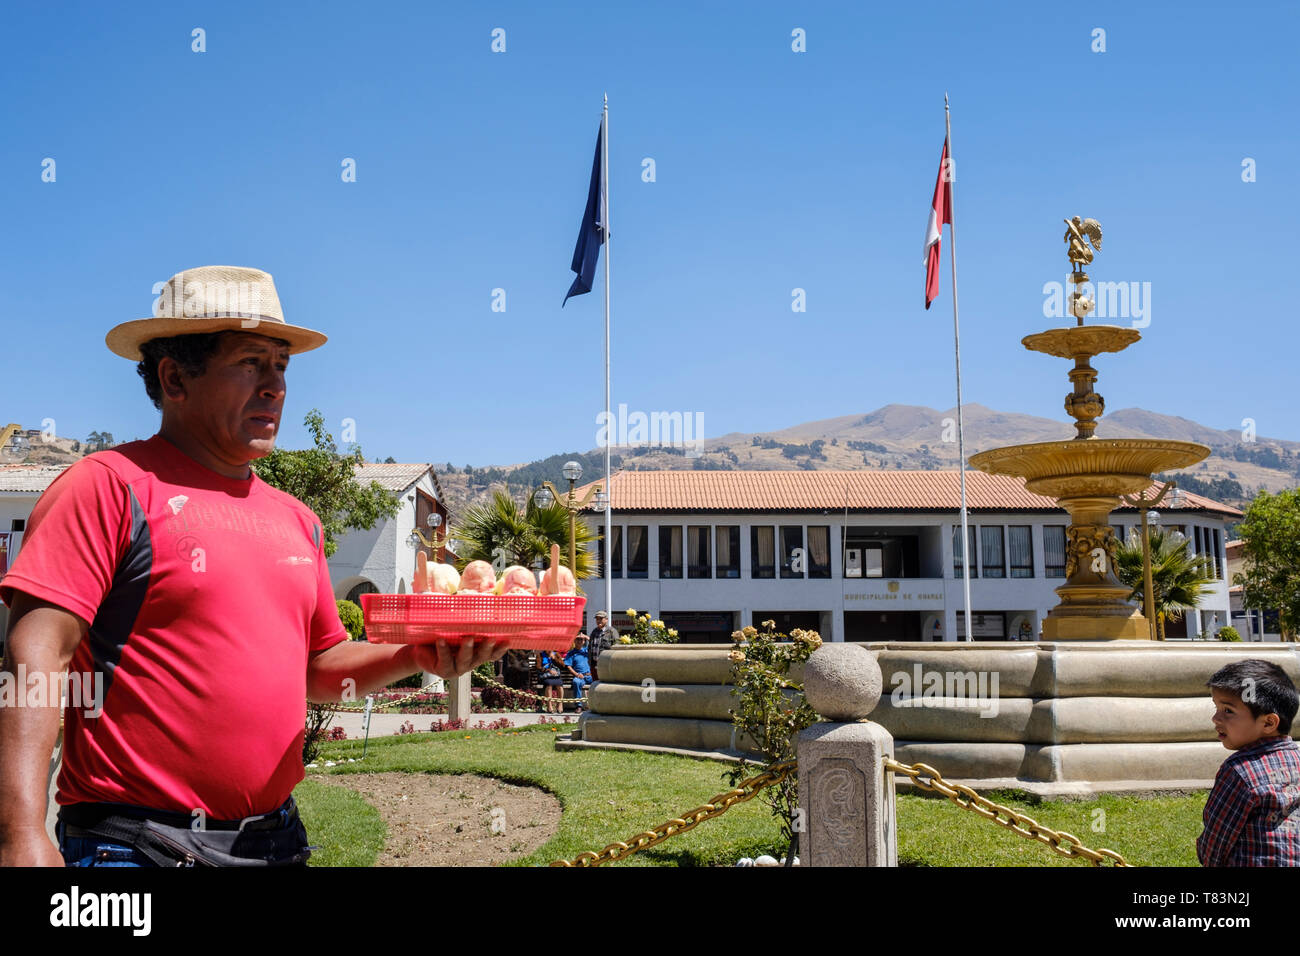 Little boy looking at the ice cream hawker at Plaza de Armas or Main Square of Huaraz, Ancash Region, Peru Stock Photo